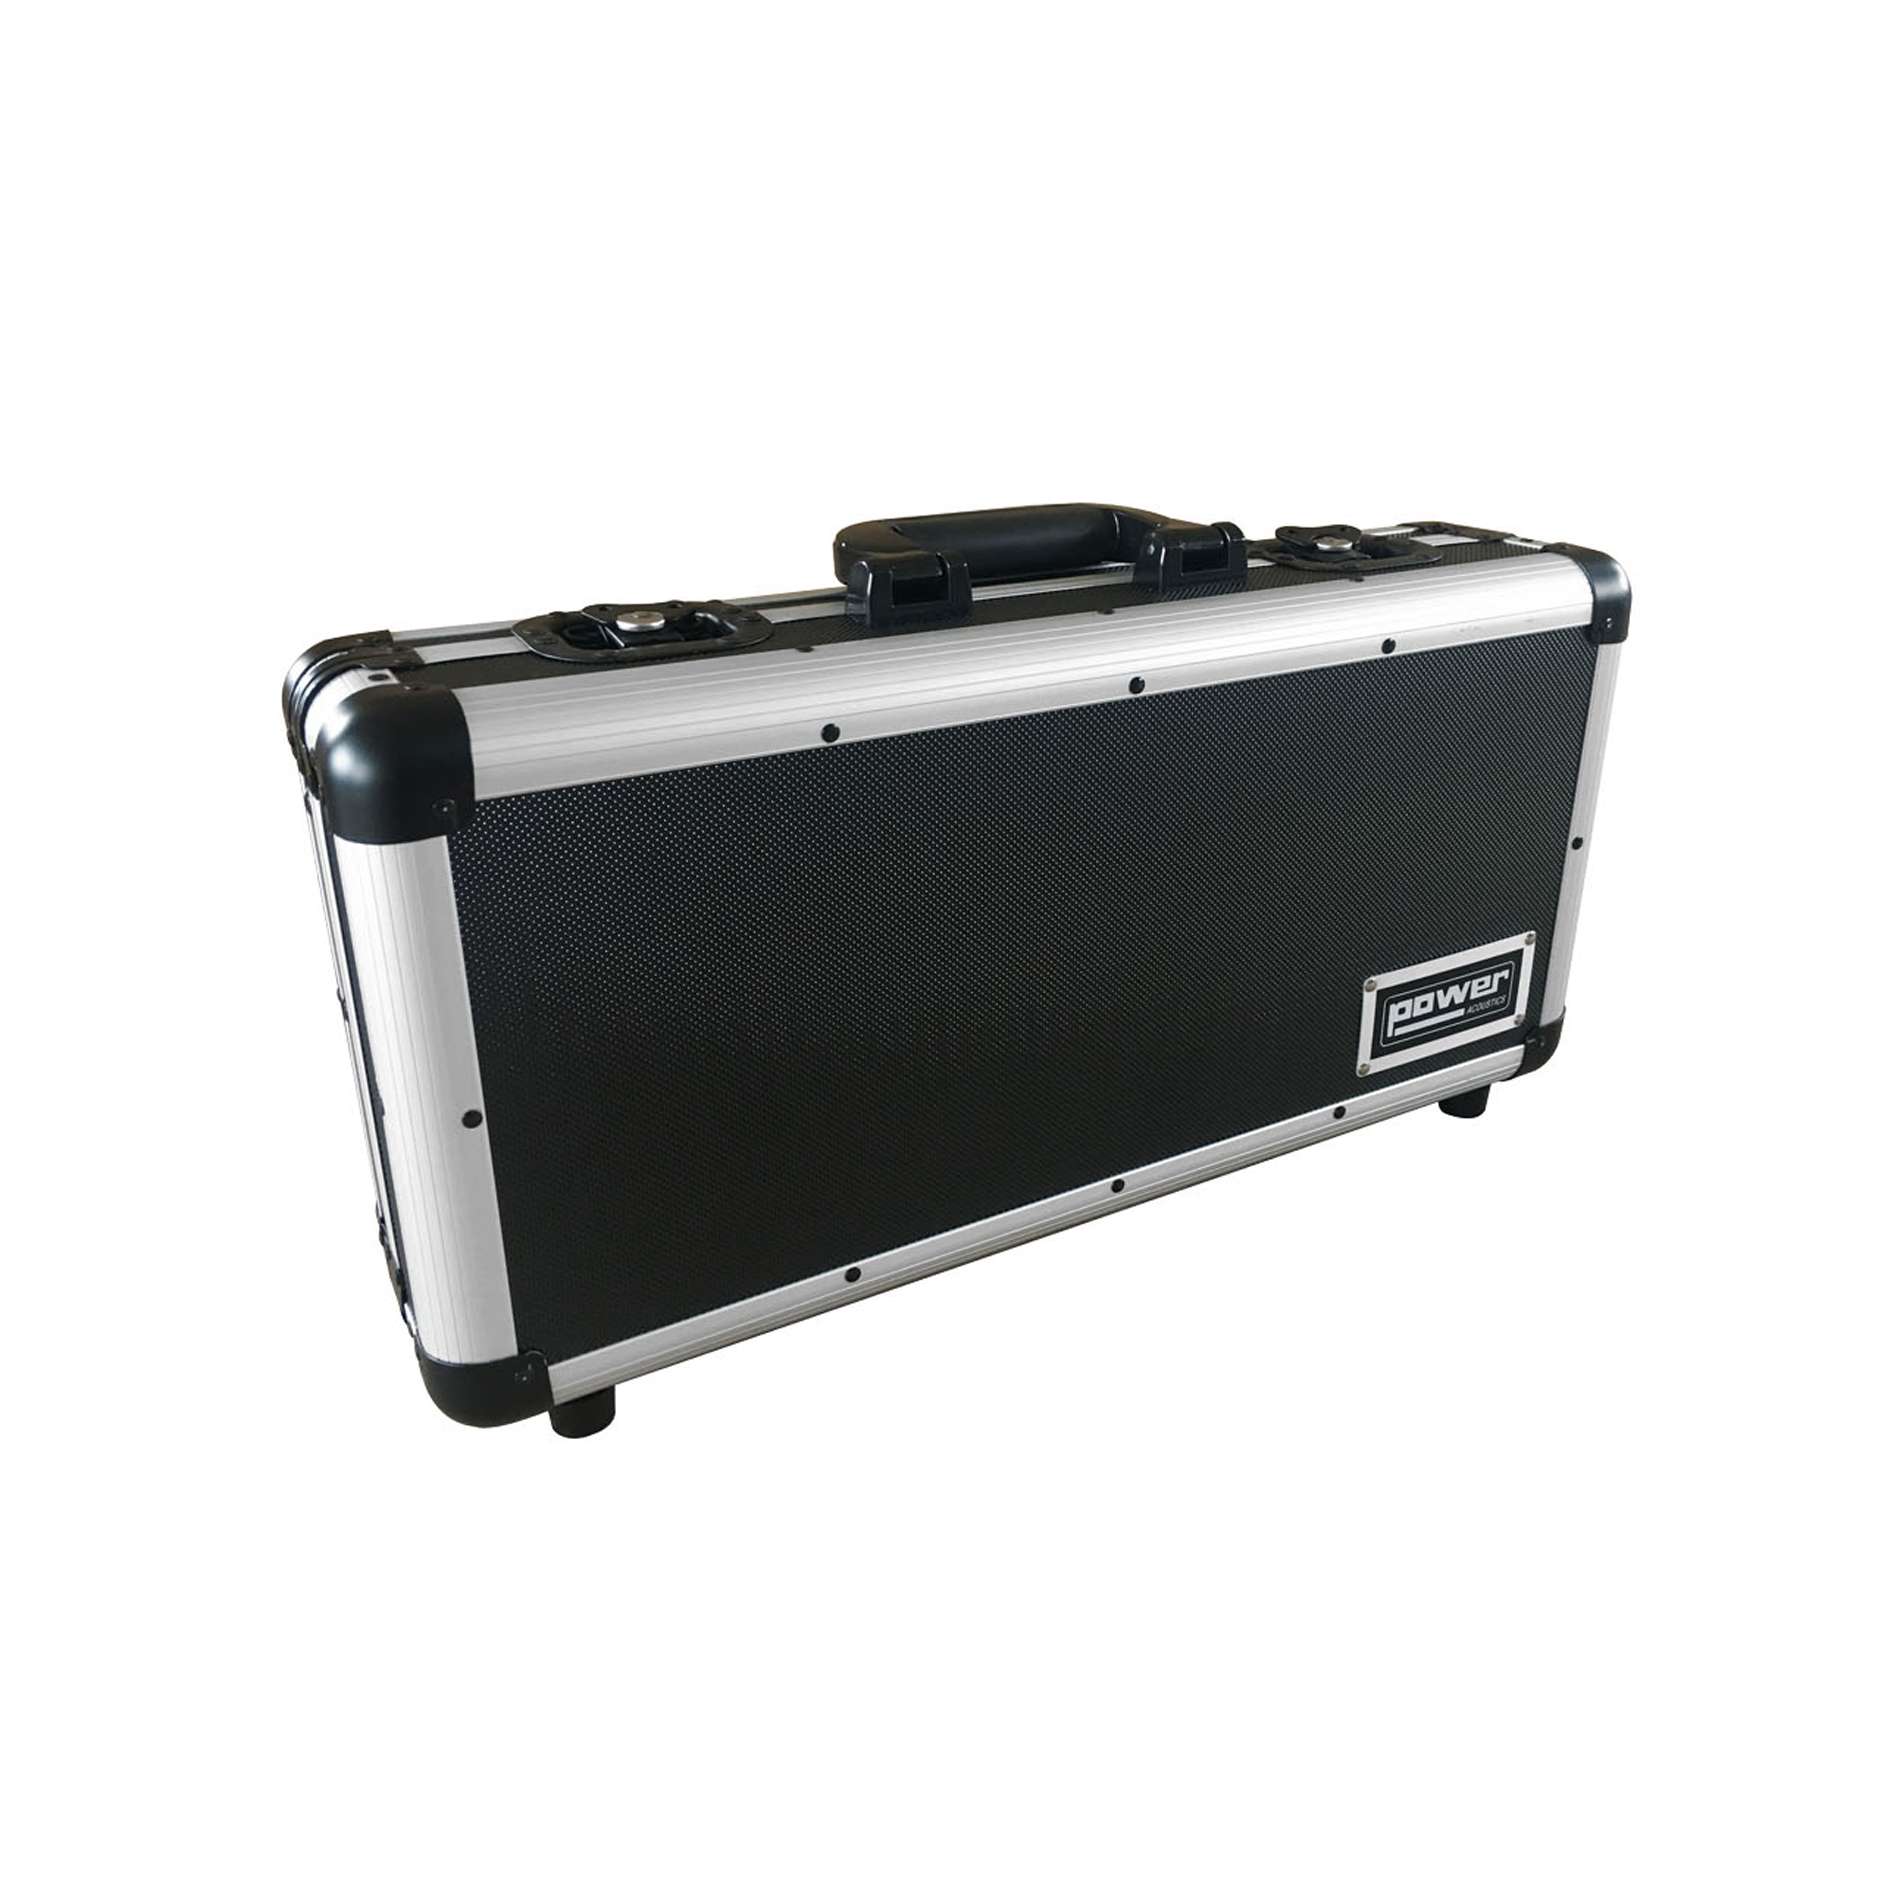 Power Acoustics Fl Dmx Controller - Bag & flightcase for lighting equipment - Variation 3